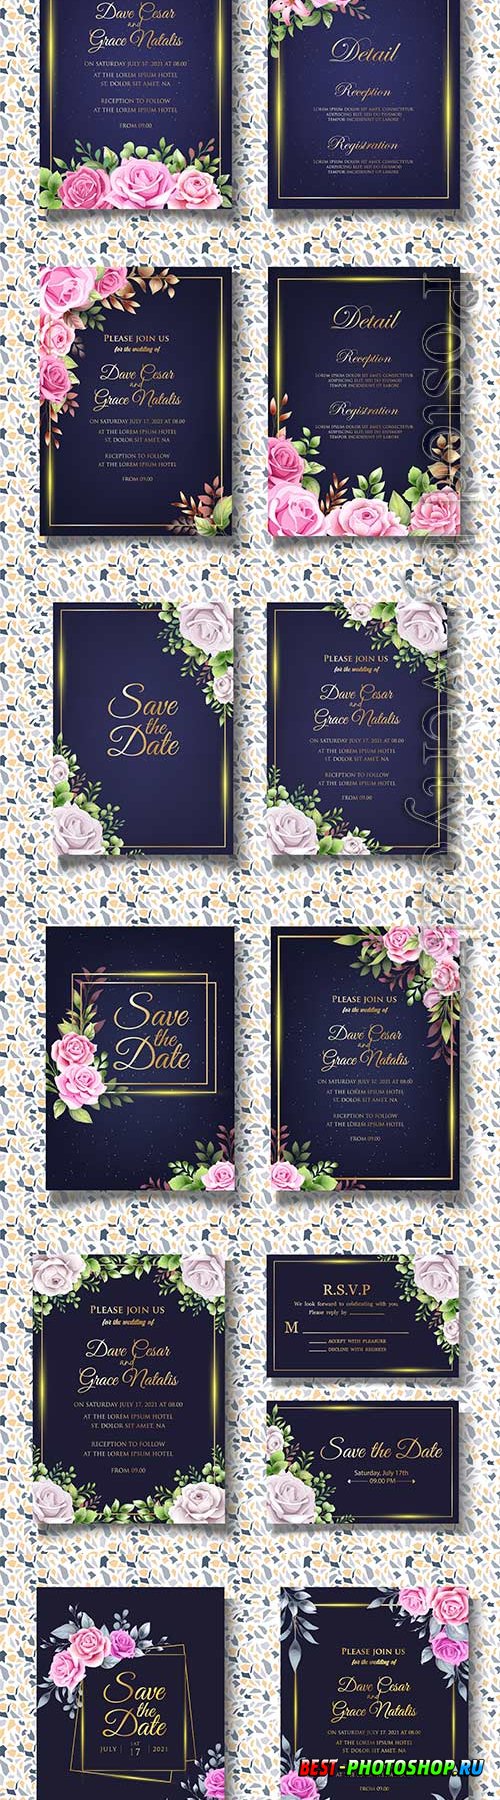 Floral wedding invitation vector template